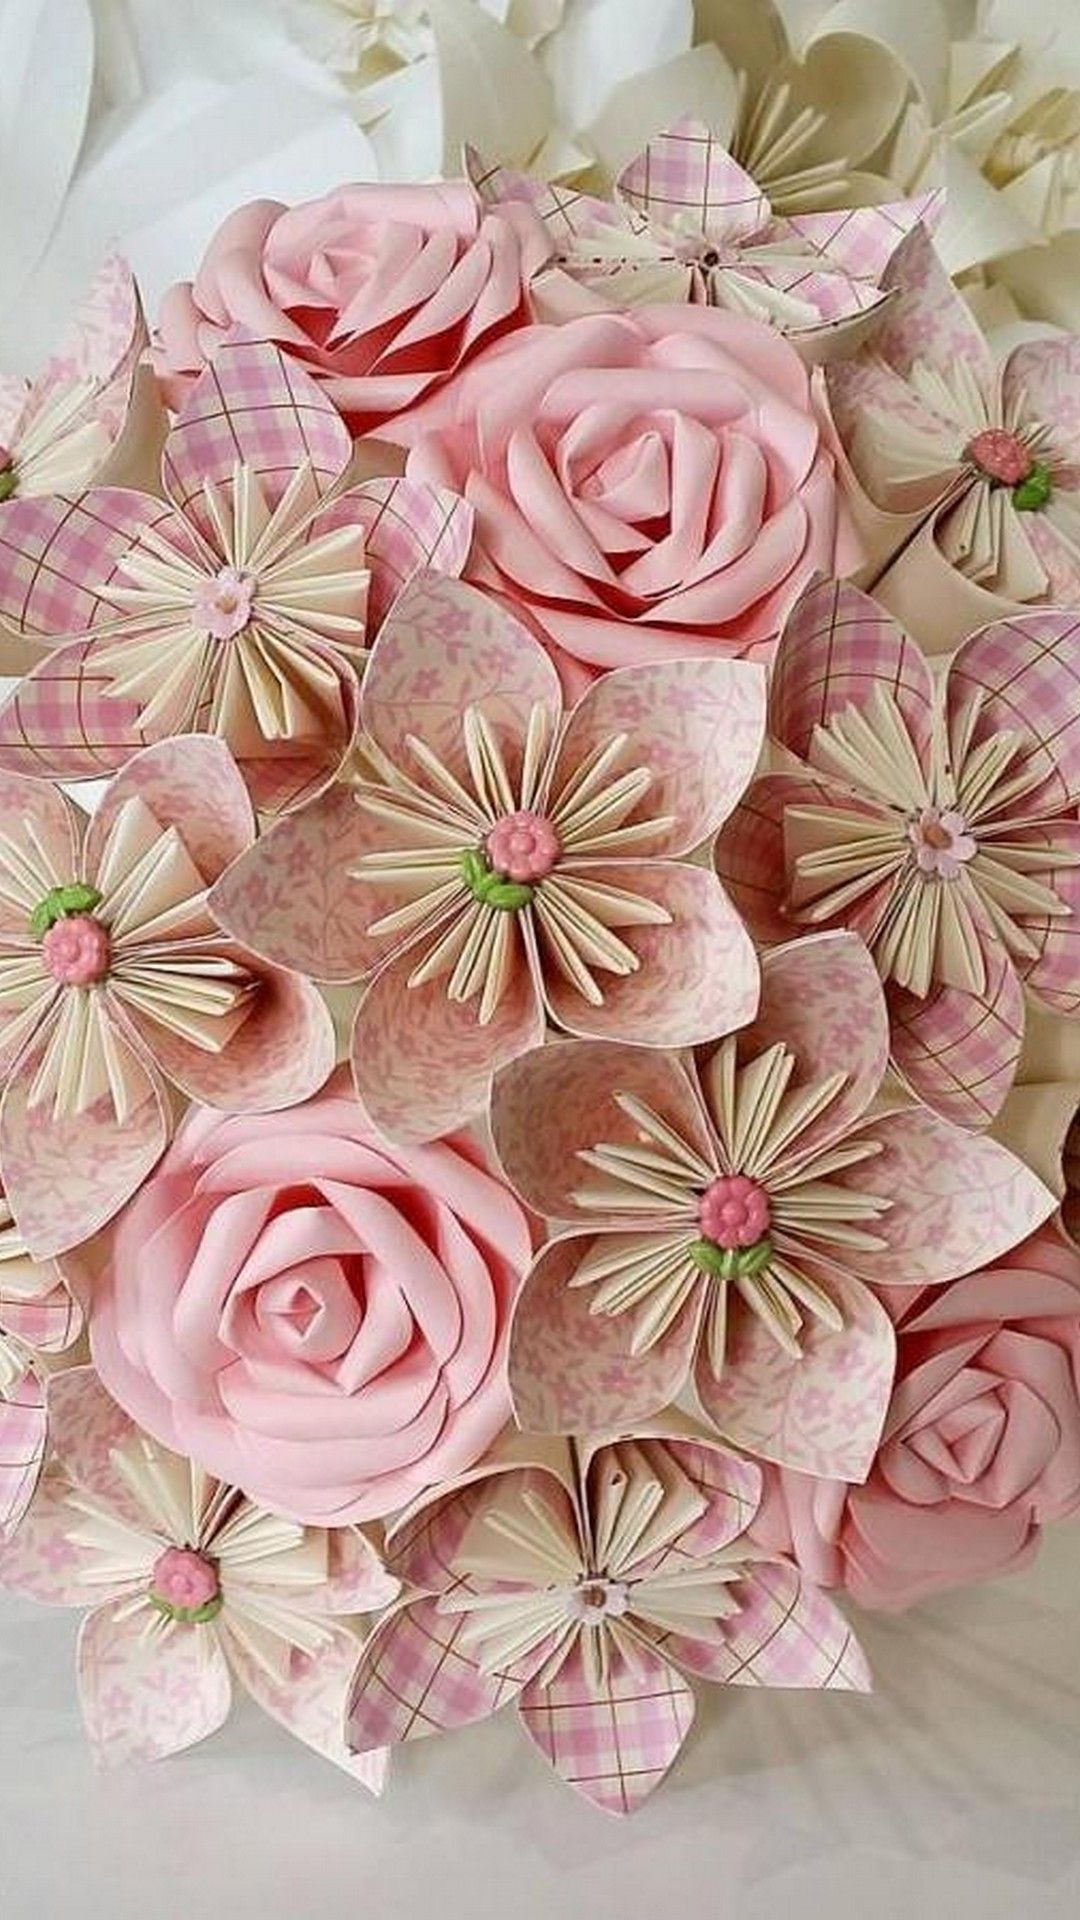 Flower Phone Backgrounds - Rose Mobile Wallpaper Flowers , HD Wallpaper & Backgrounds